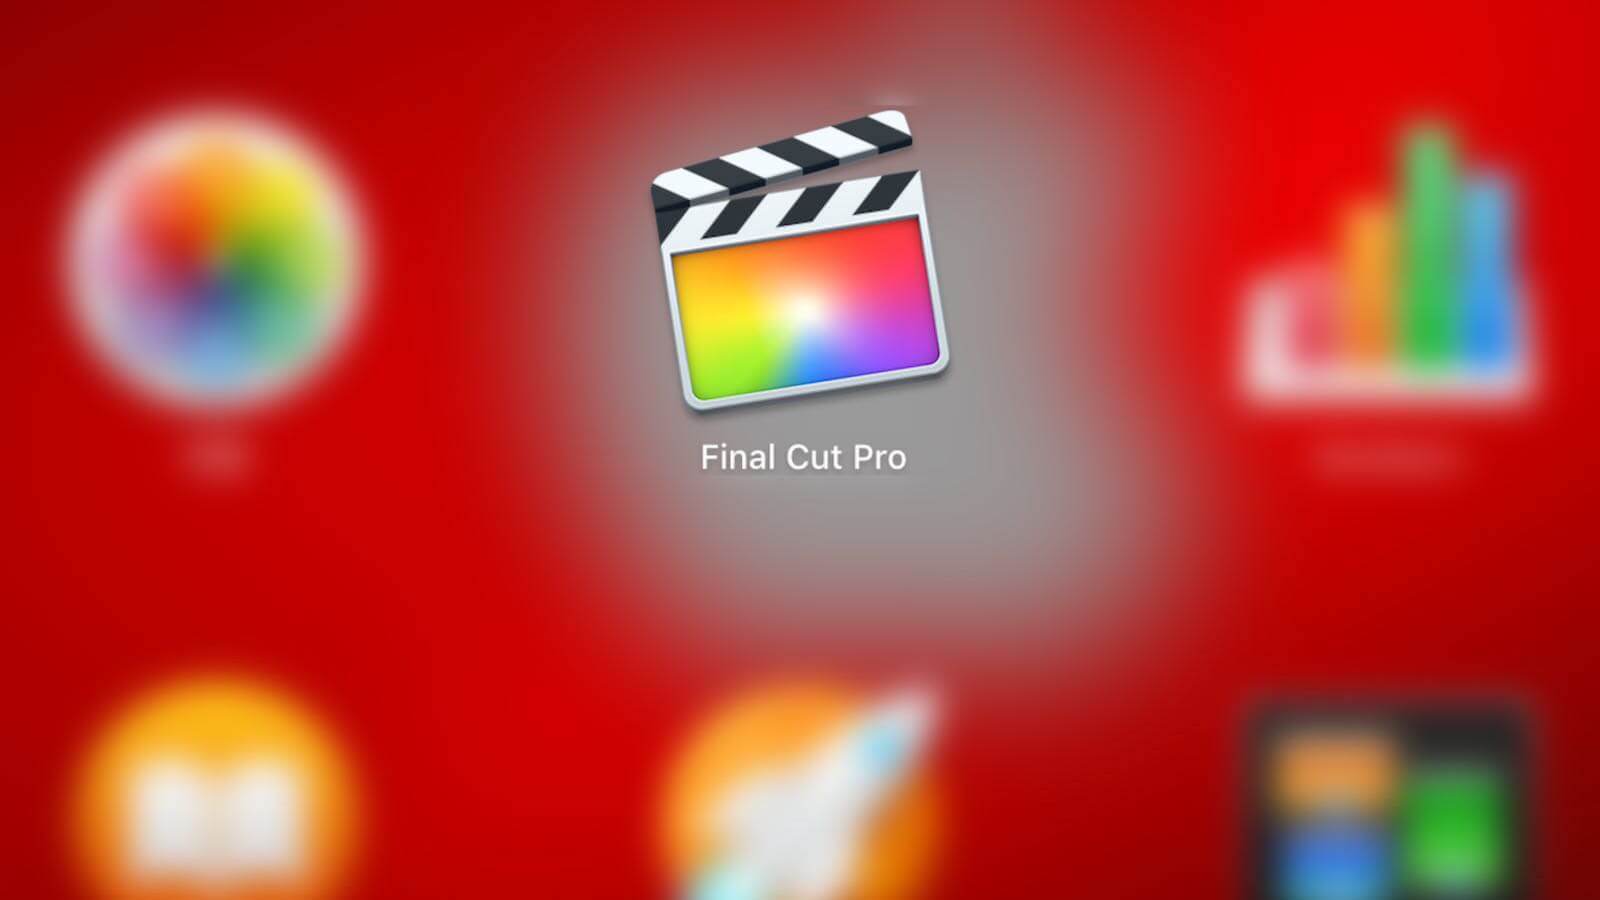 Final Cut Pro logo